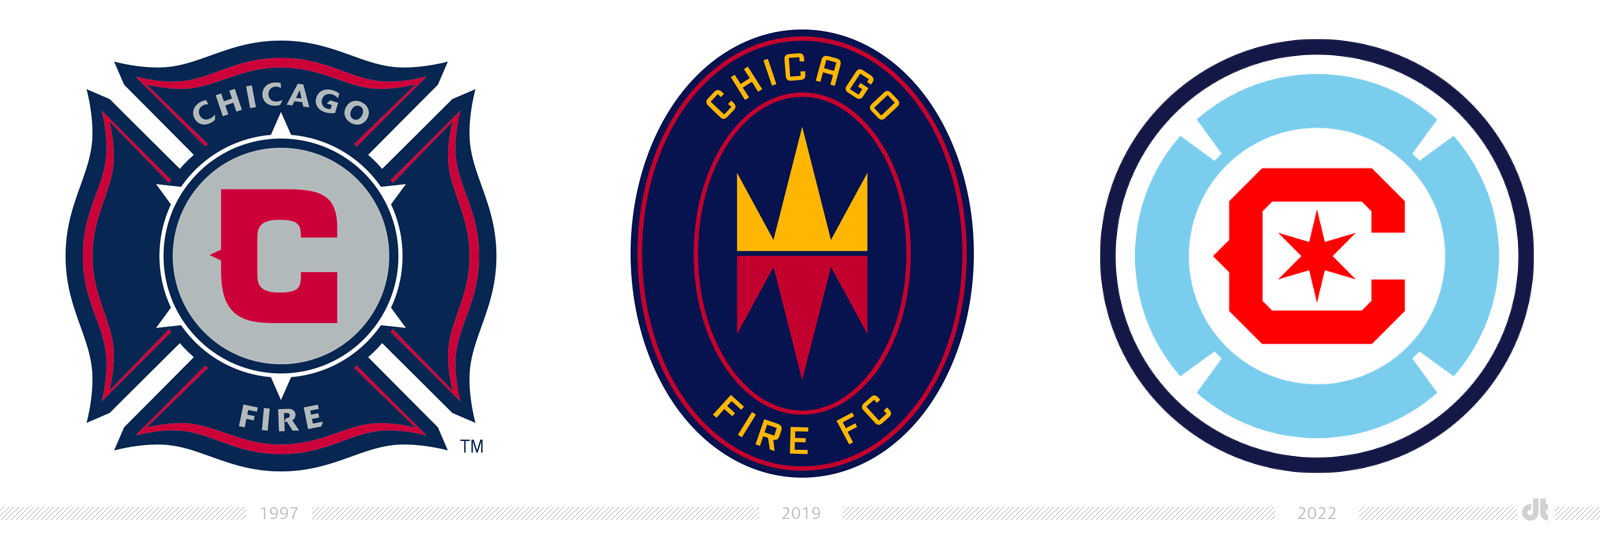 Chicago Fire FC Logo - 之前和之后